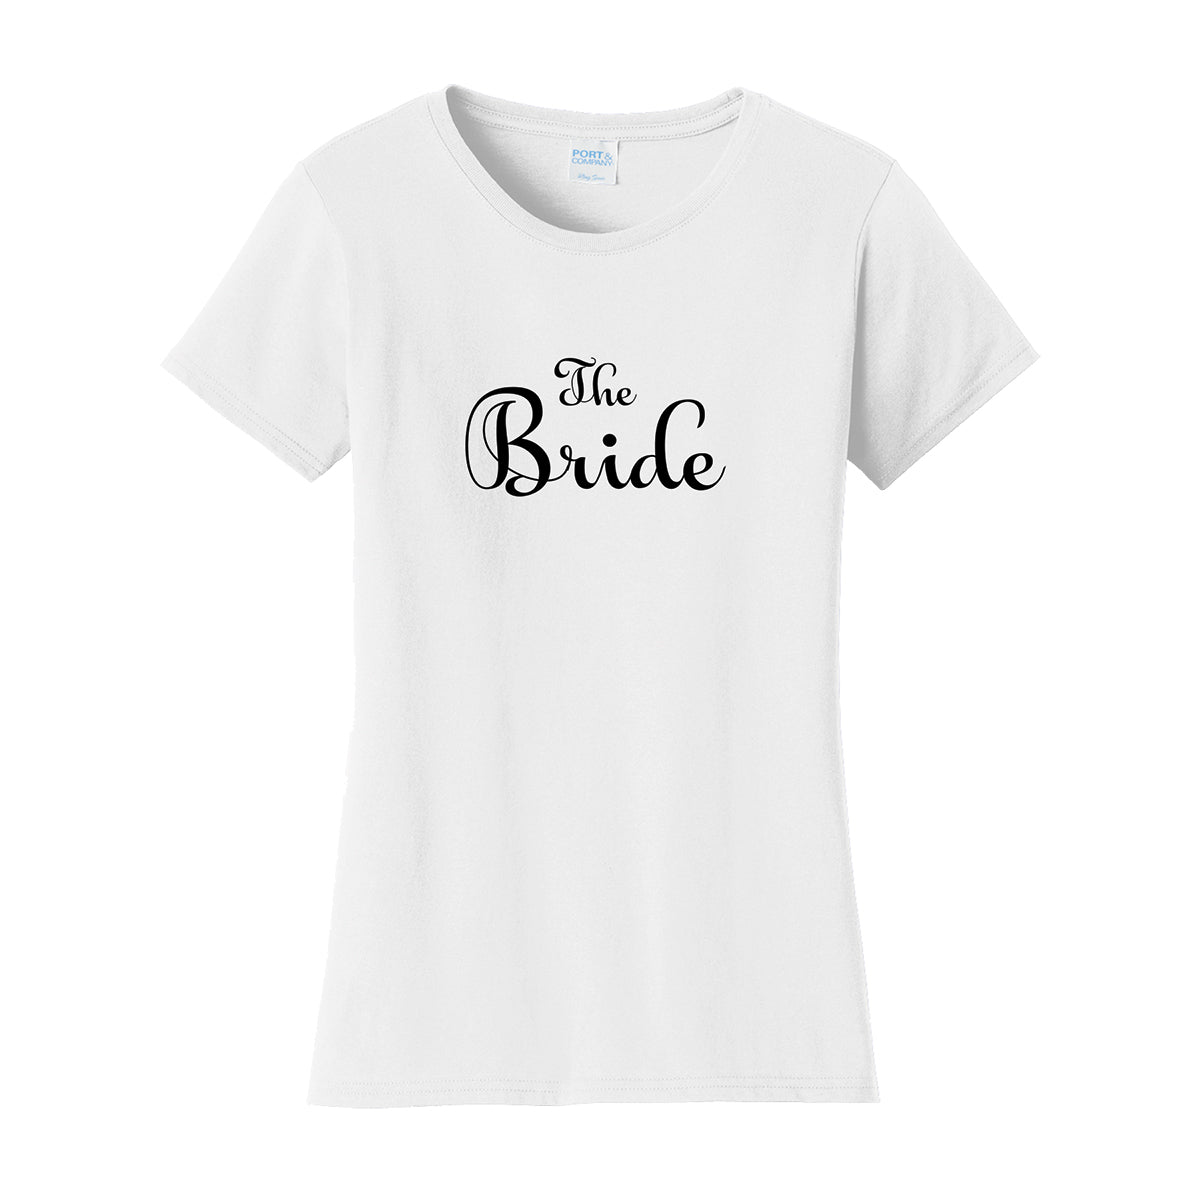 "The Bride" Bridal Party Shirt